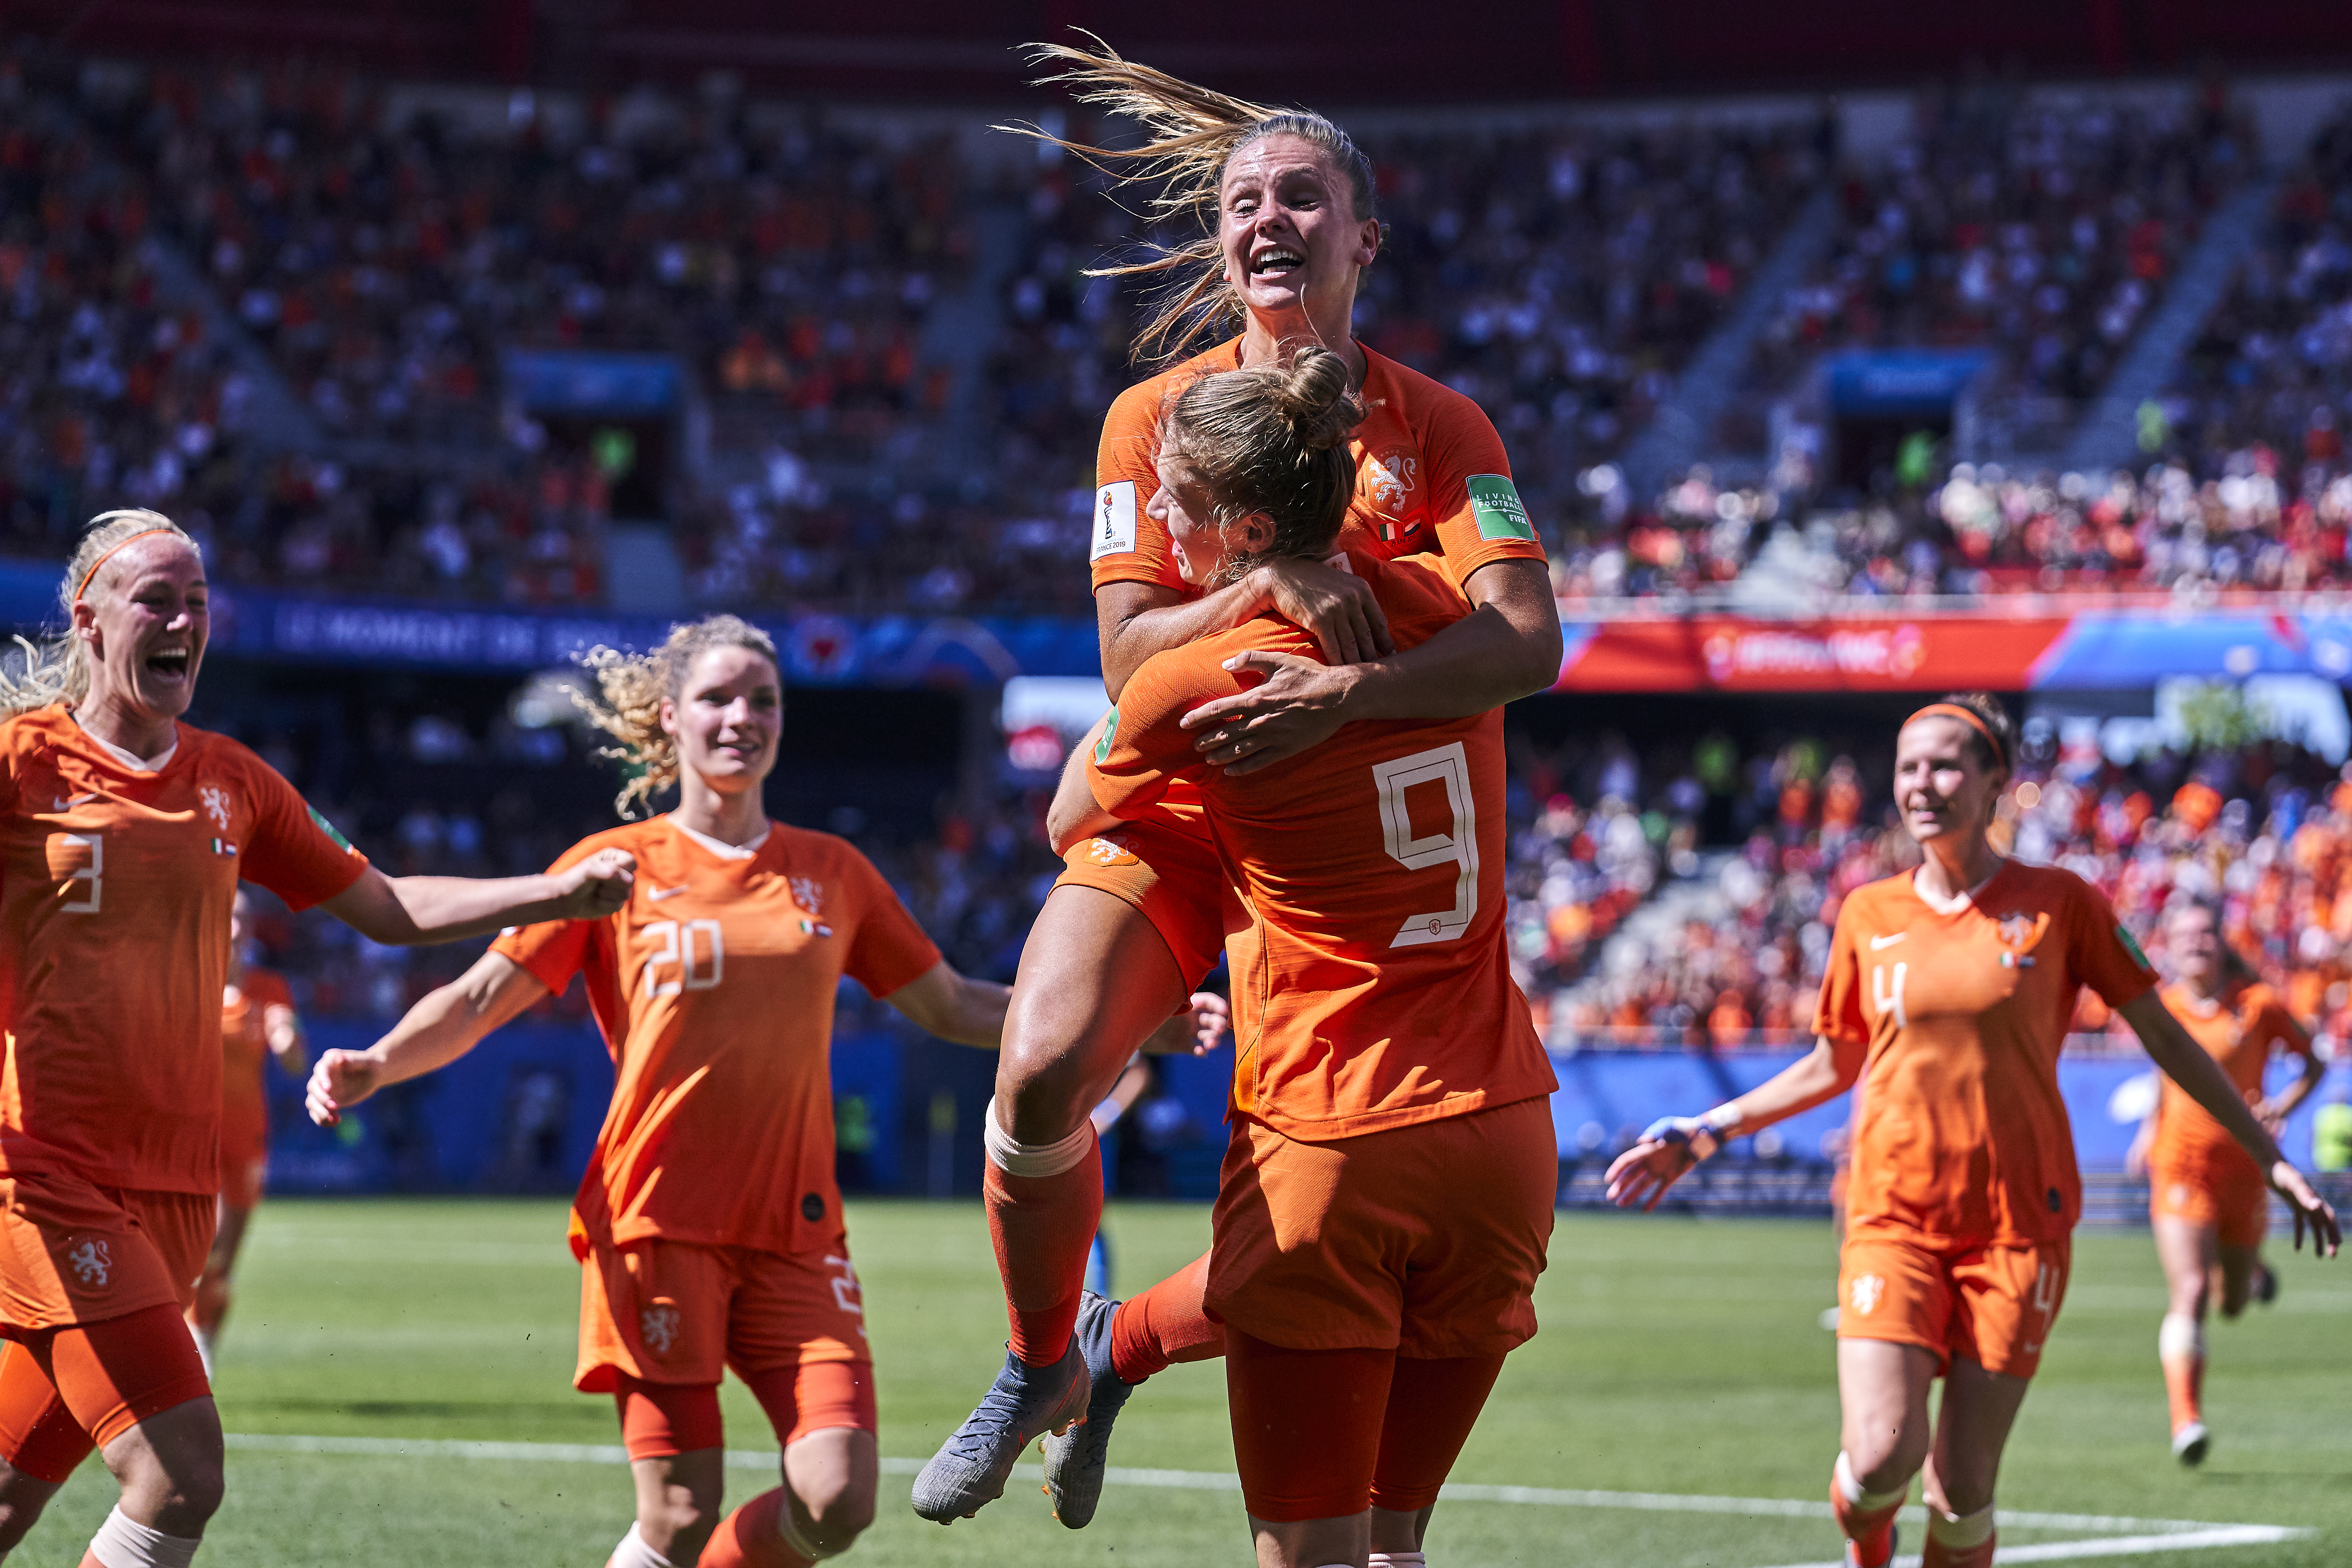 Italy v Netherlands: Quarter Final - 2019 FIFA Women’s World Cup France